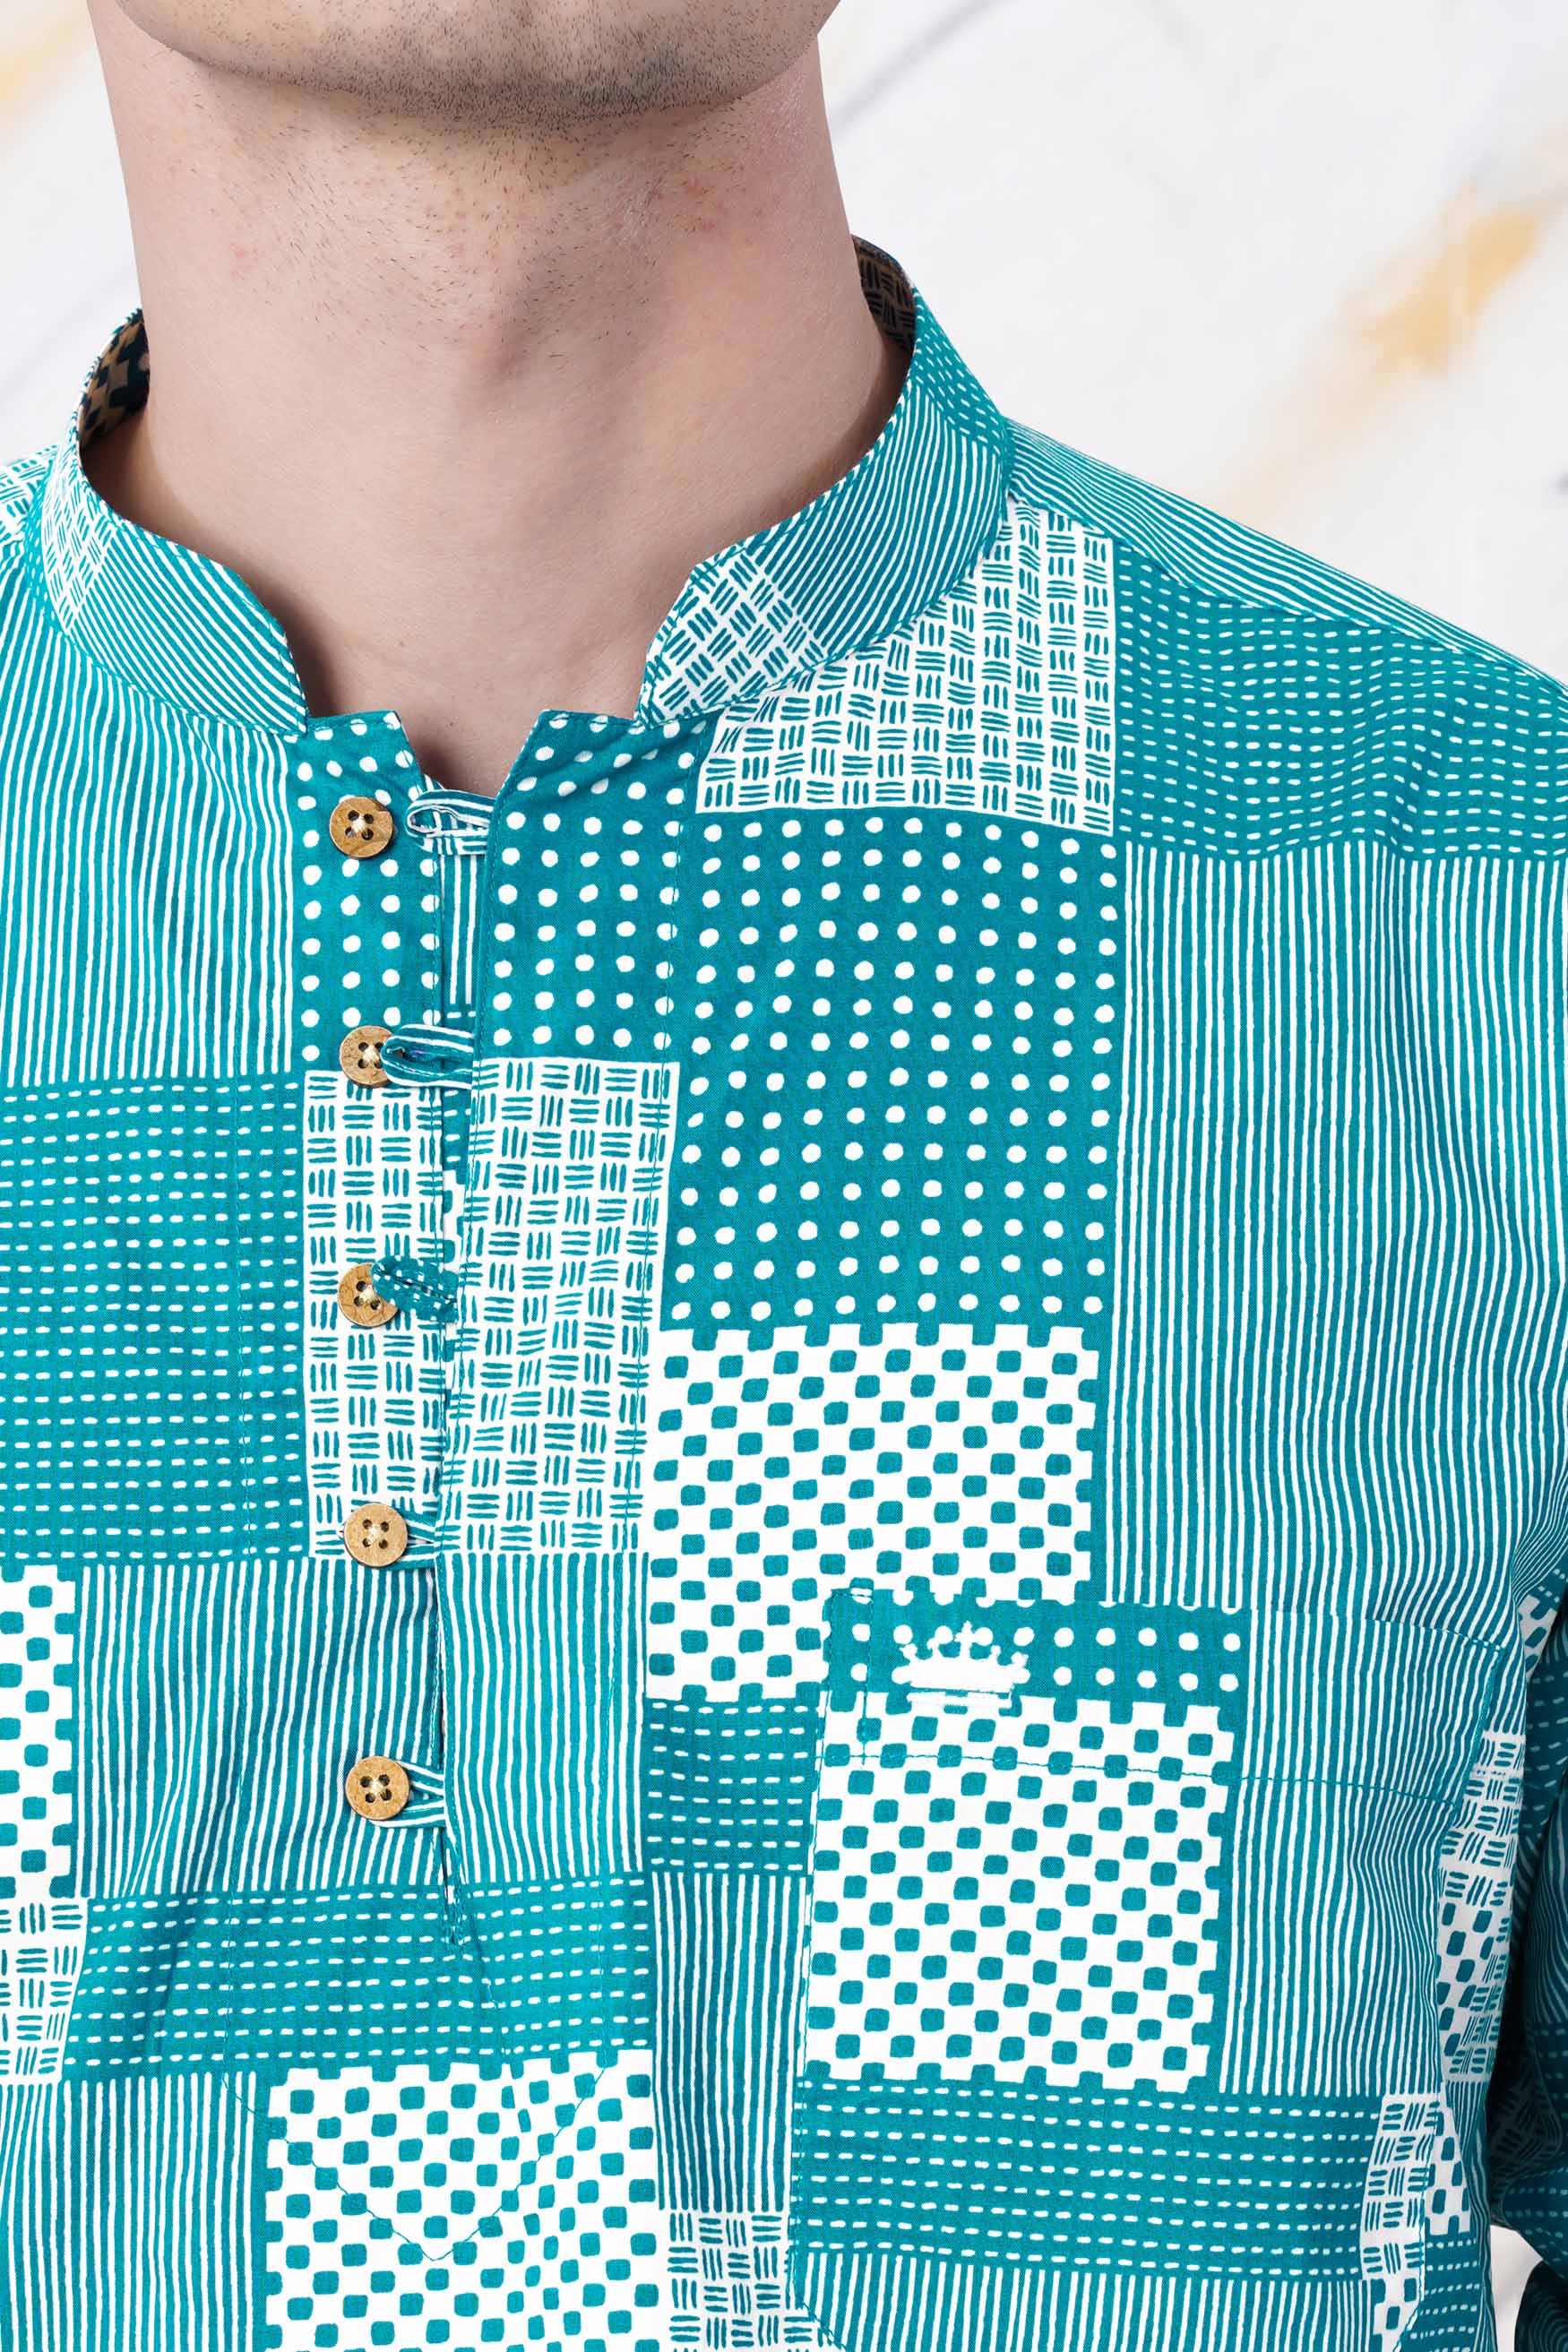 Pacific Blue and White Tile Printed Premium Cotton Kurta Shirt